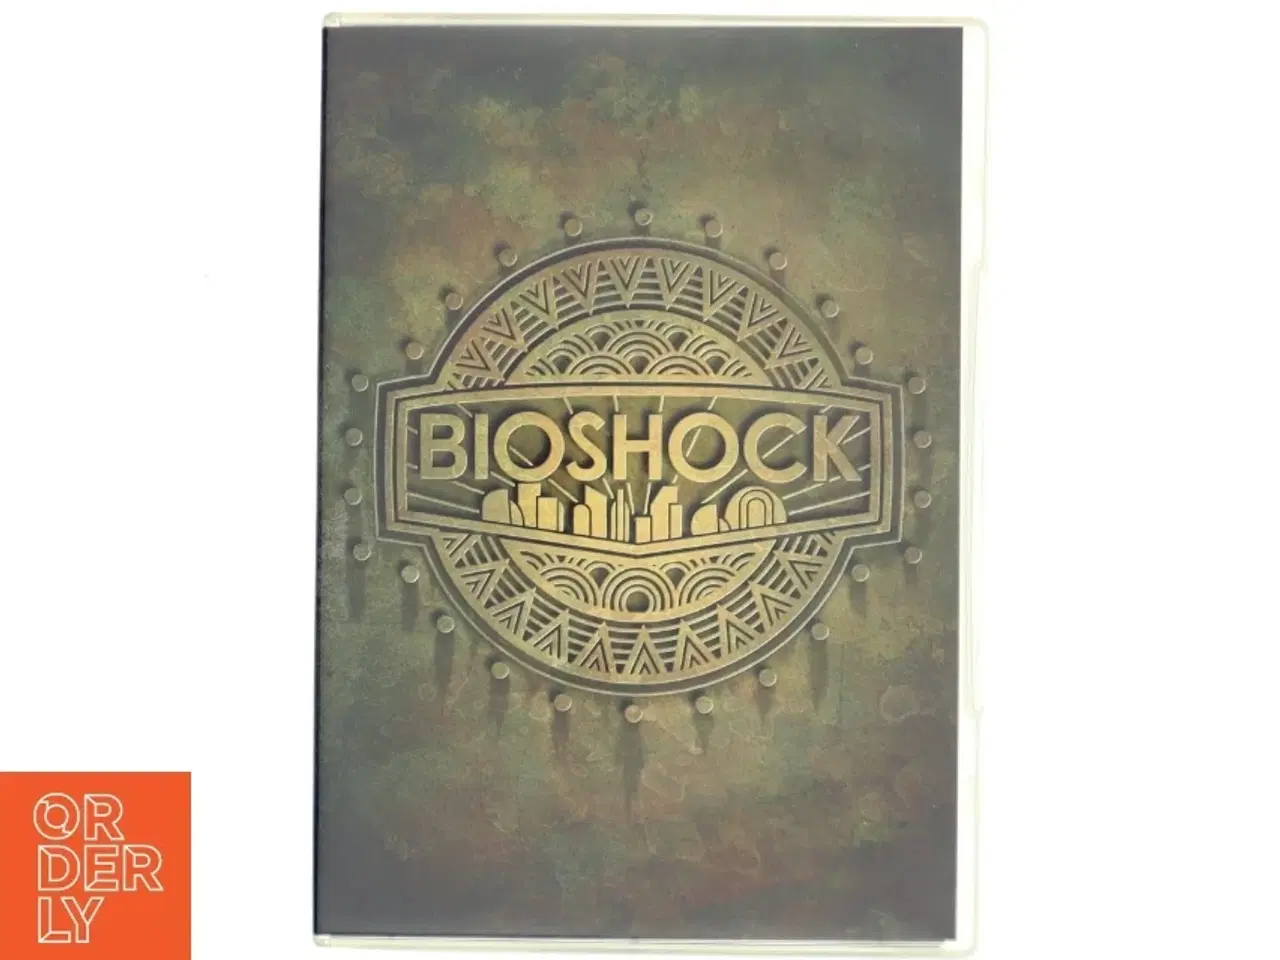 Billede 1 - Bioshock Infinite PC-spil i steelbook cover fra Bioshock